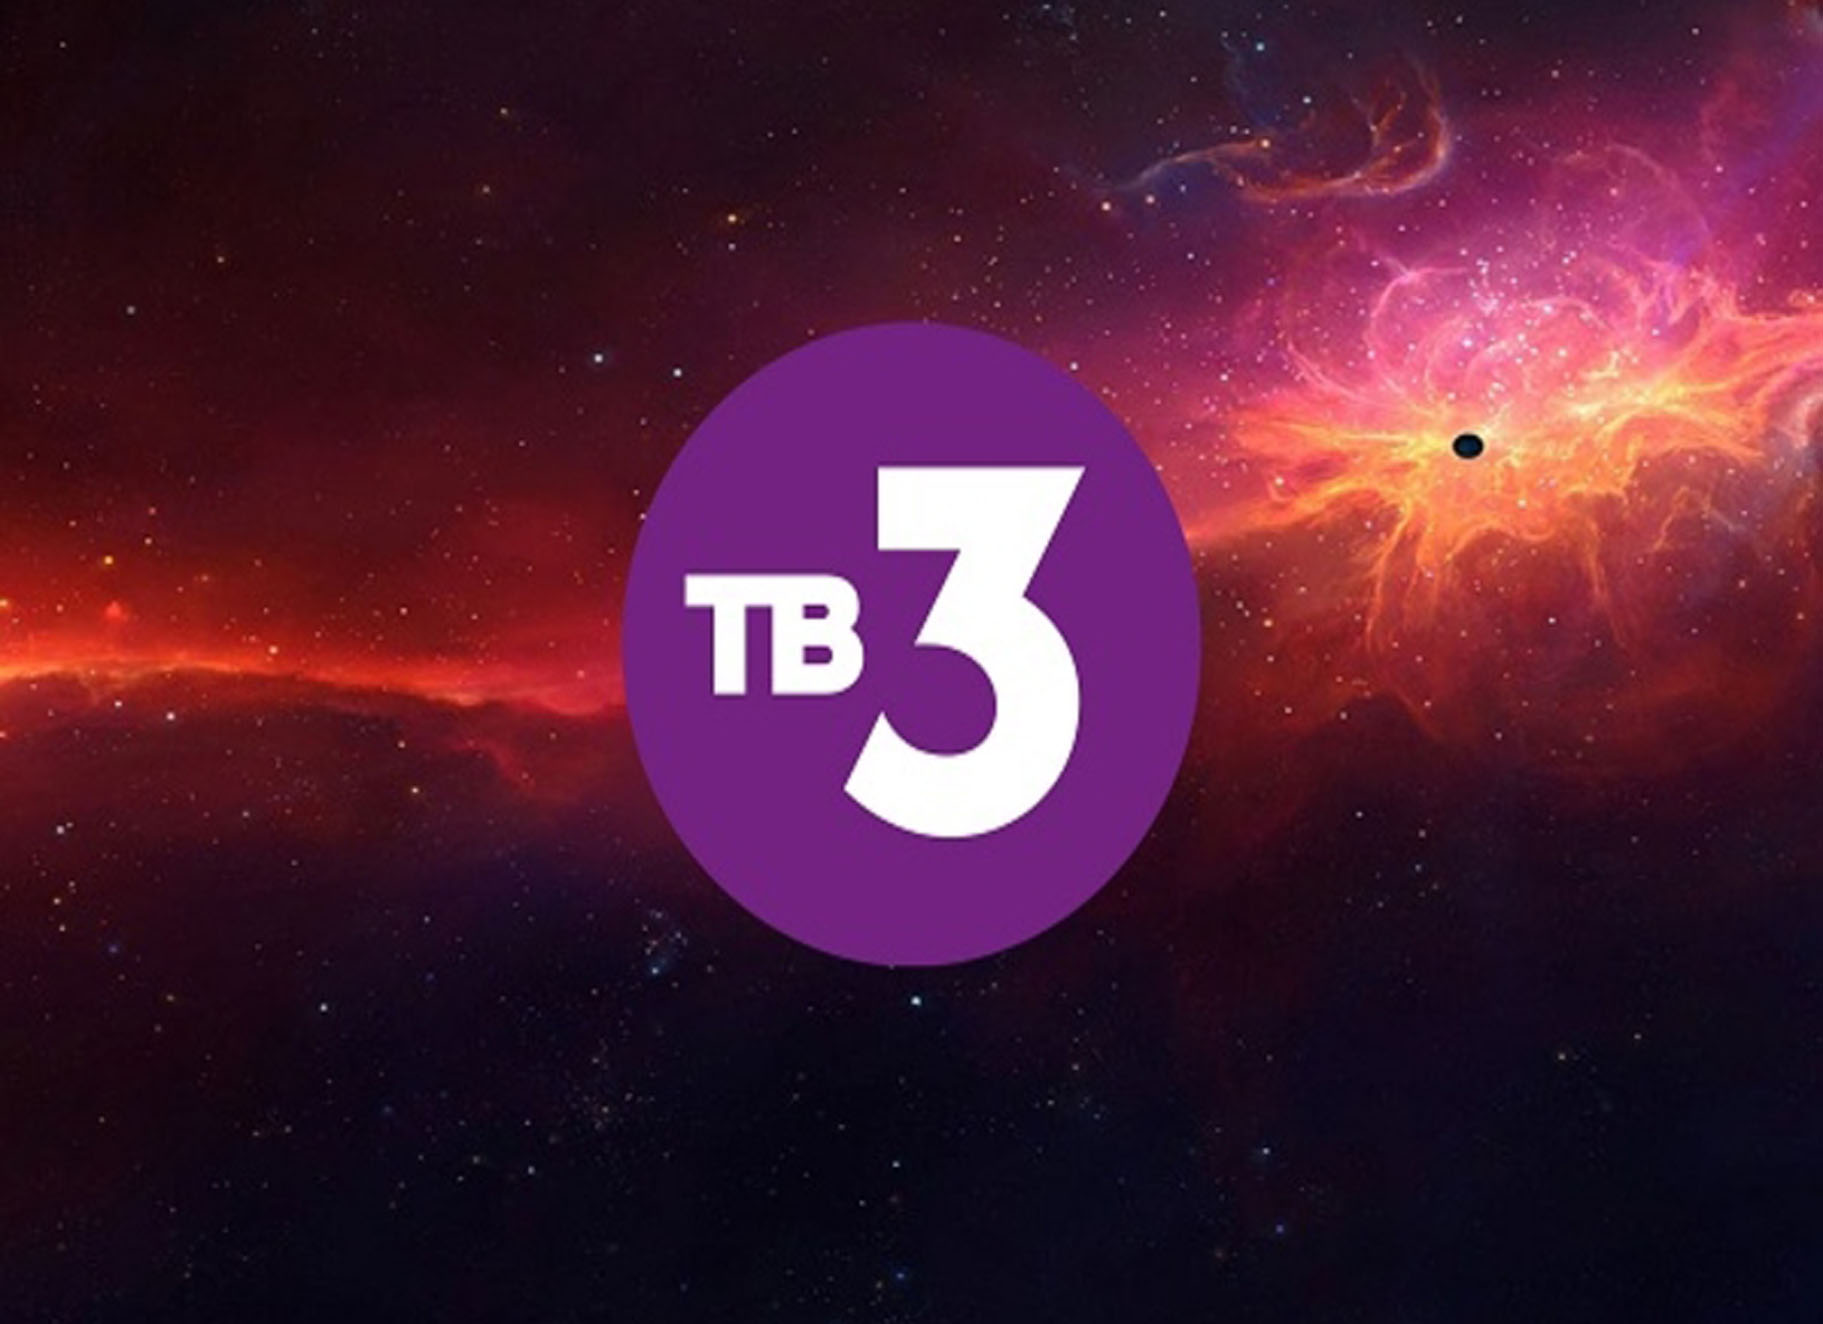 Трансляция 3 канала. Телеканал тв3. Тв3 логотип. Логотип канала тв3. ТВ 3 эмблема.